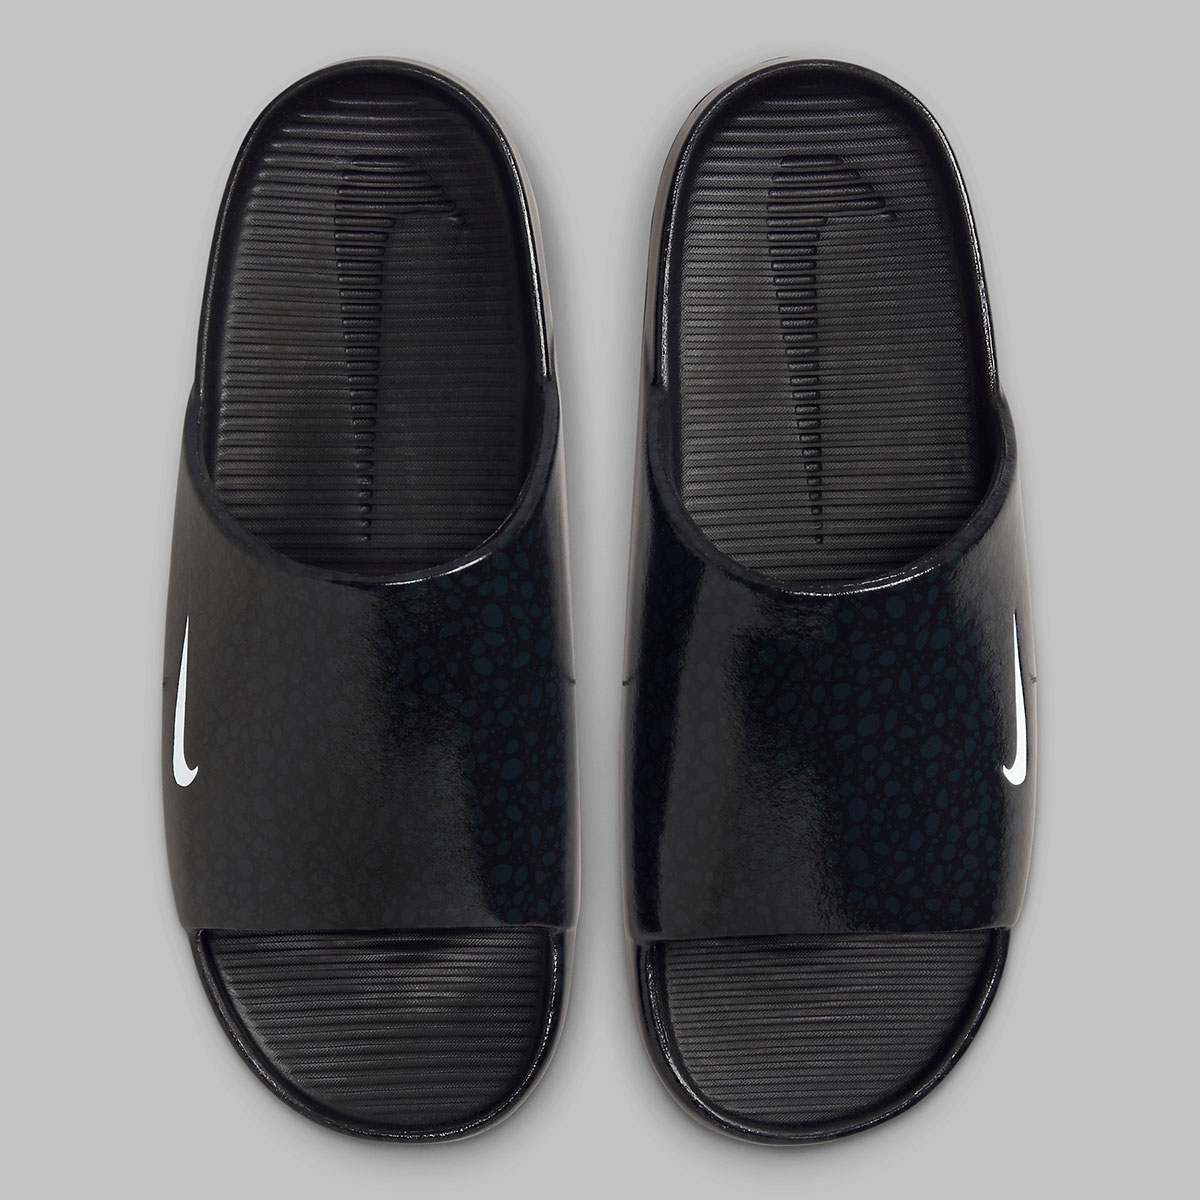 Nike Calm Slide Safari Black Hf1067 002 3